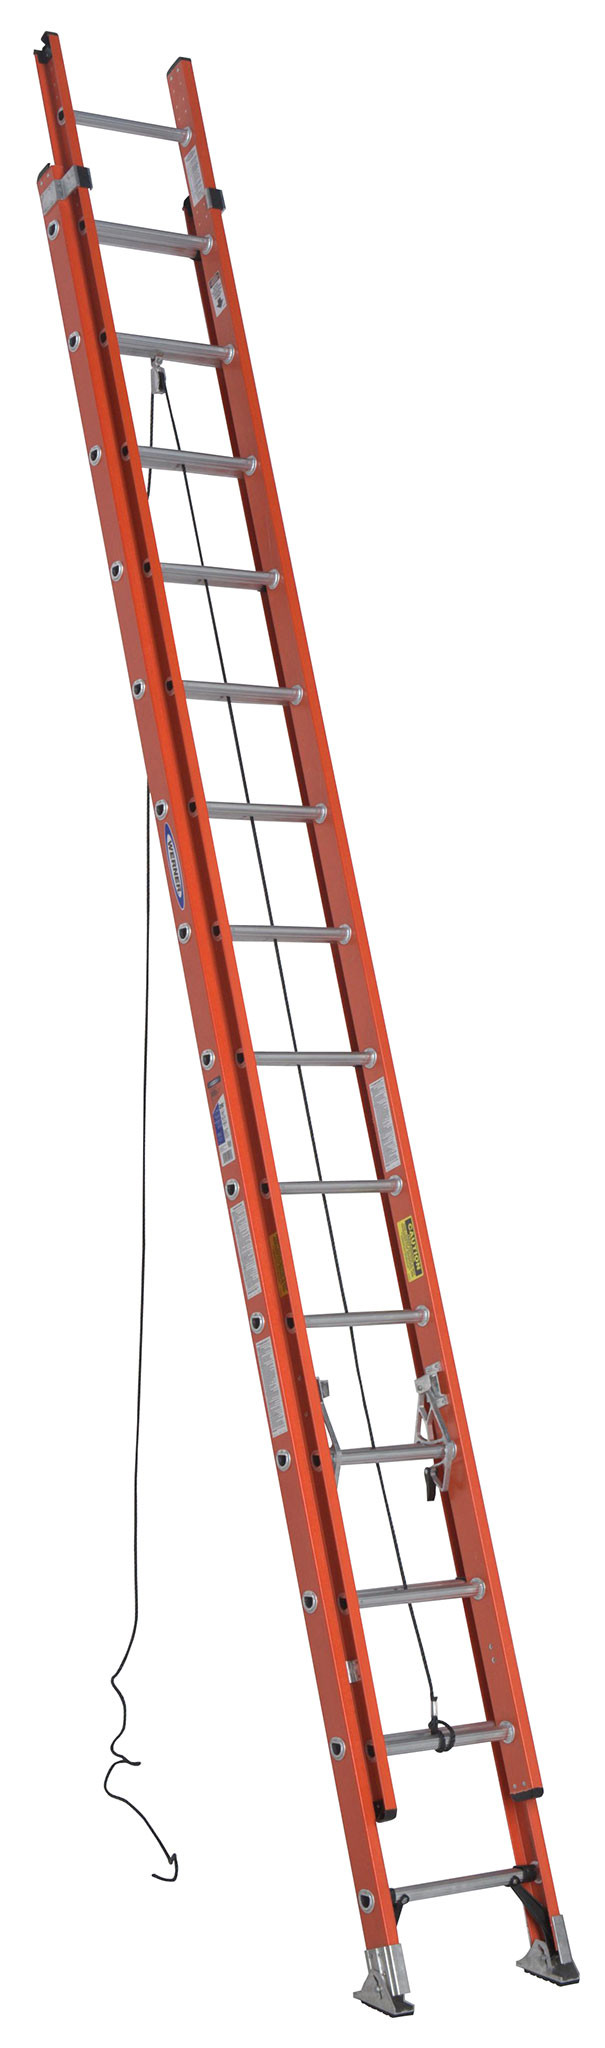 Werner 28-Foot Aluminum Extension Ladder II